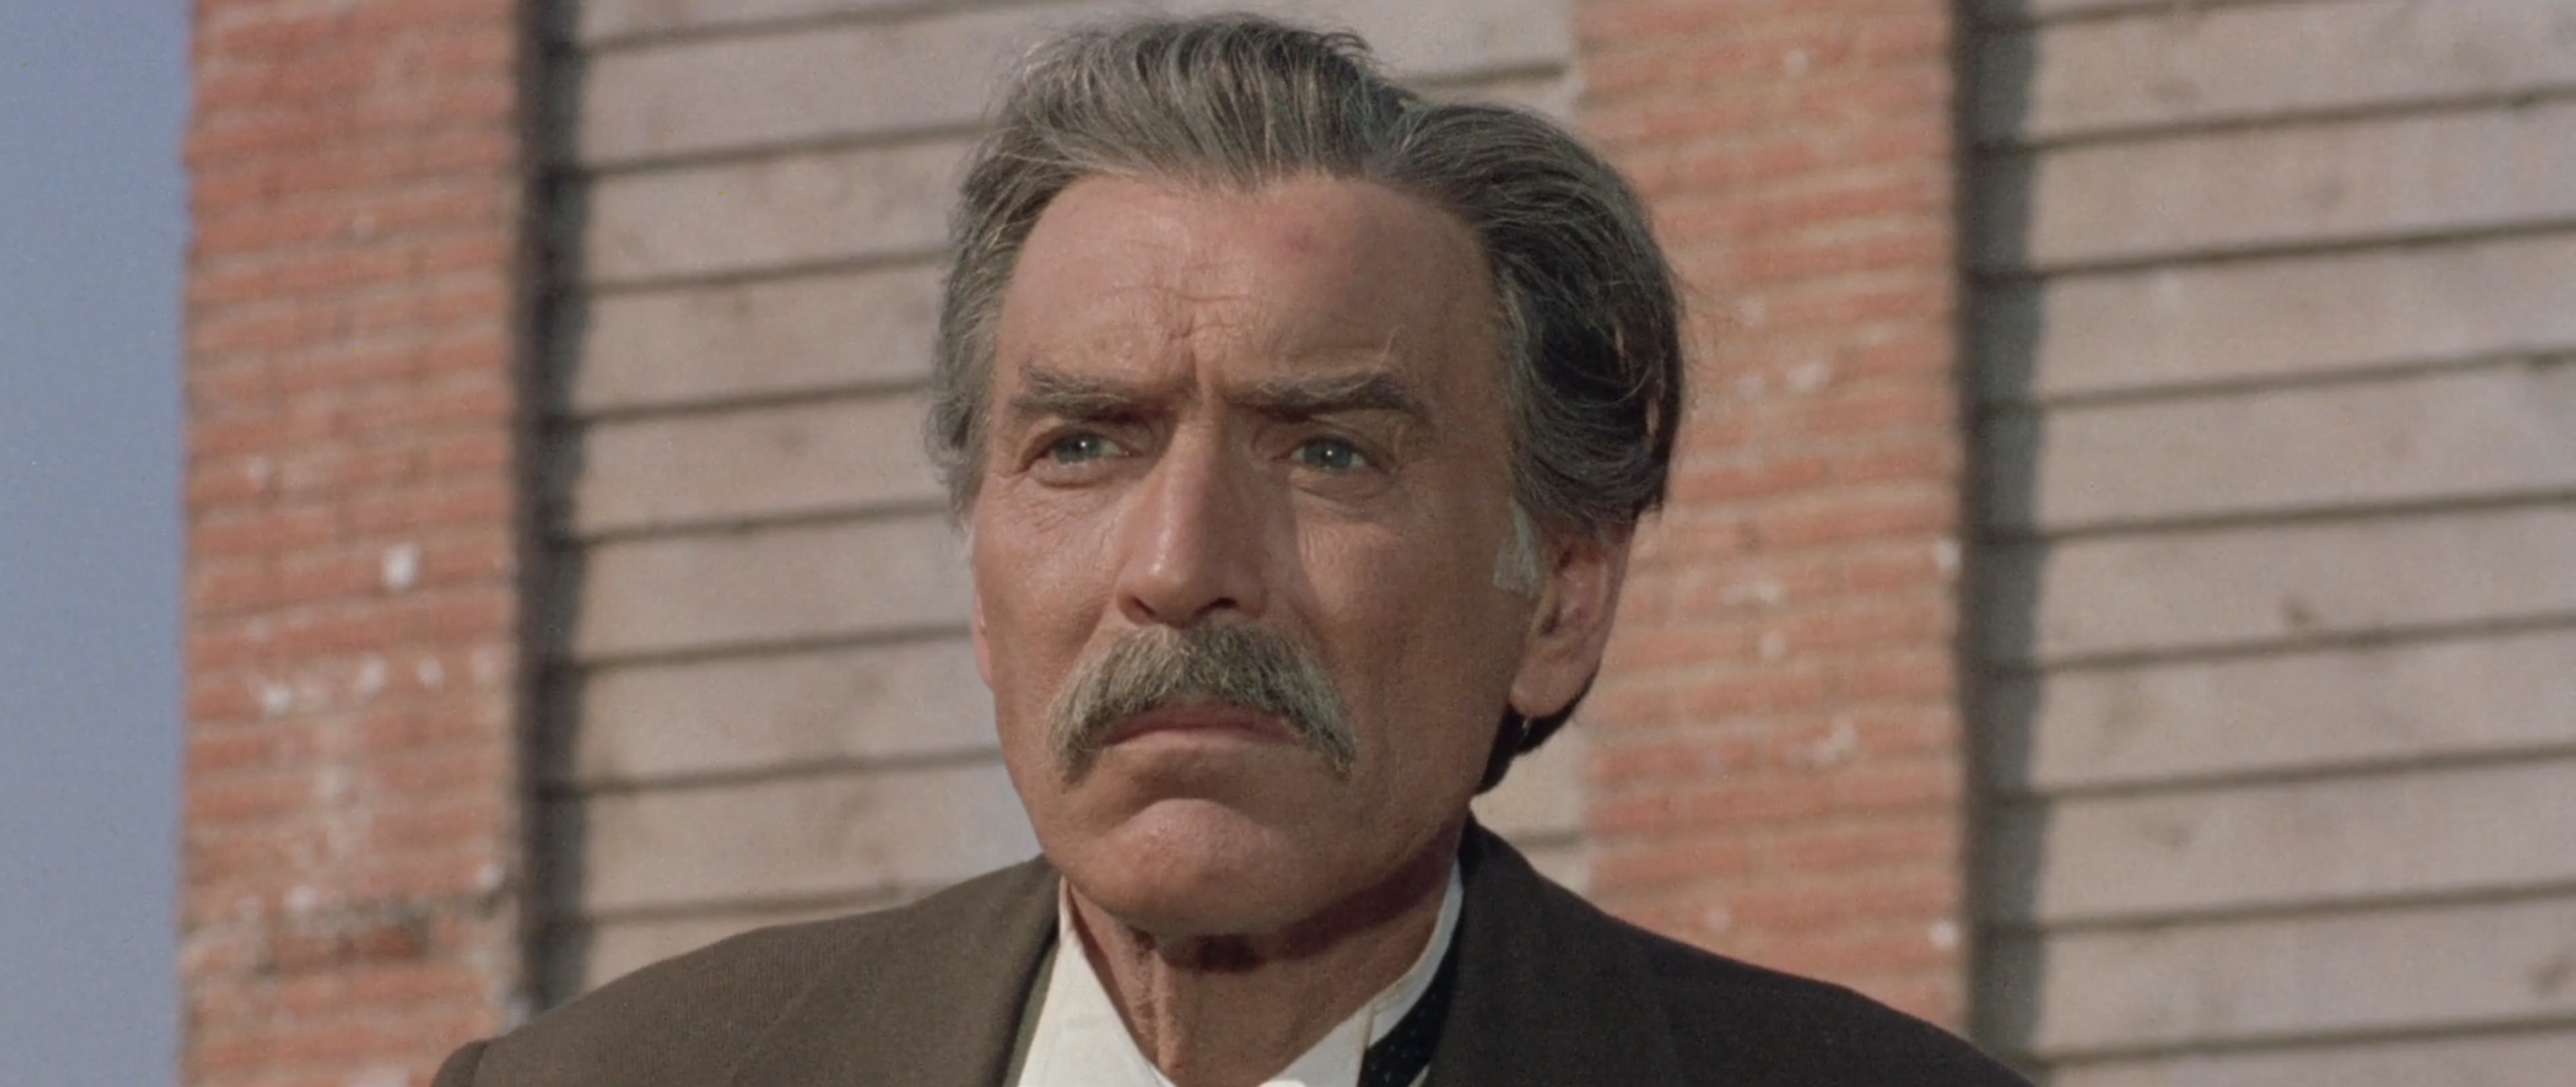 Giuseppe Addobbati as Mr. Scott in Massacre Time